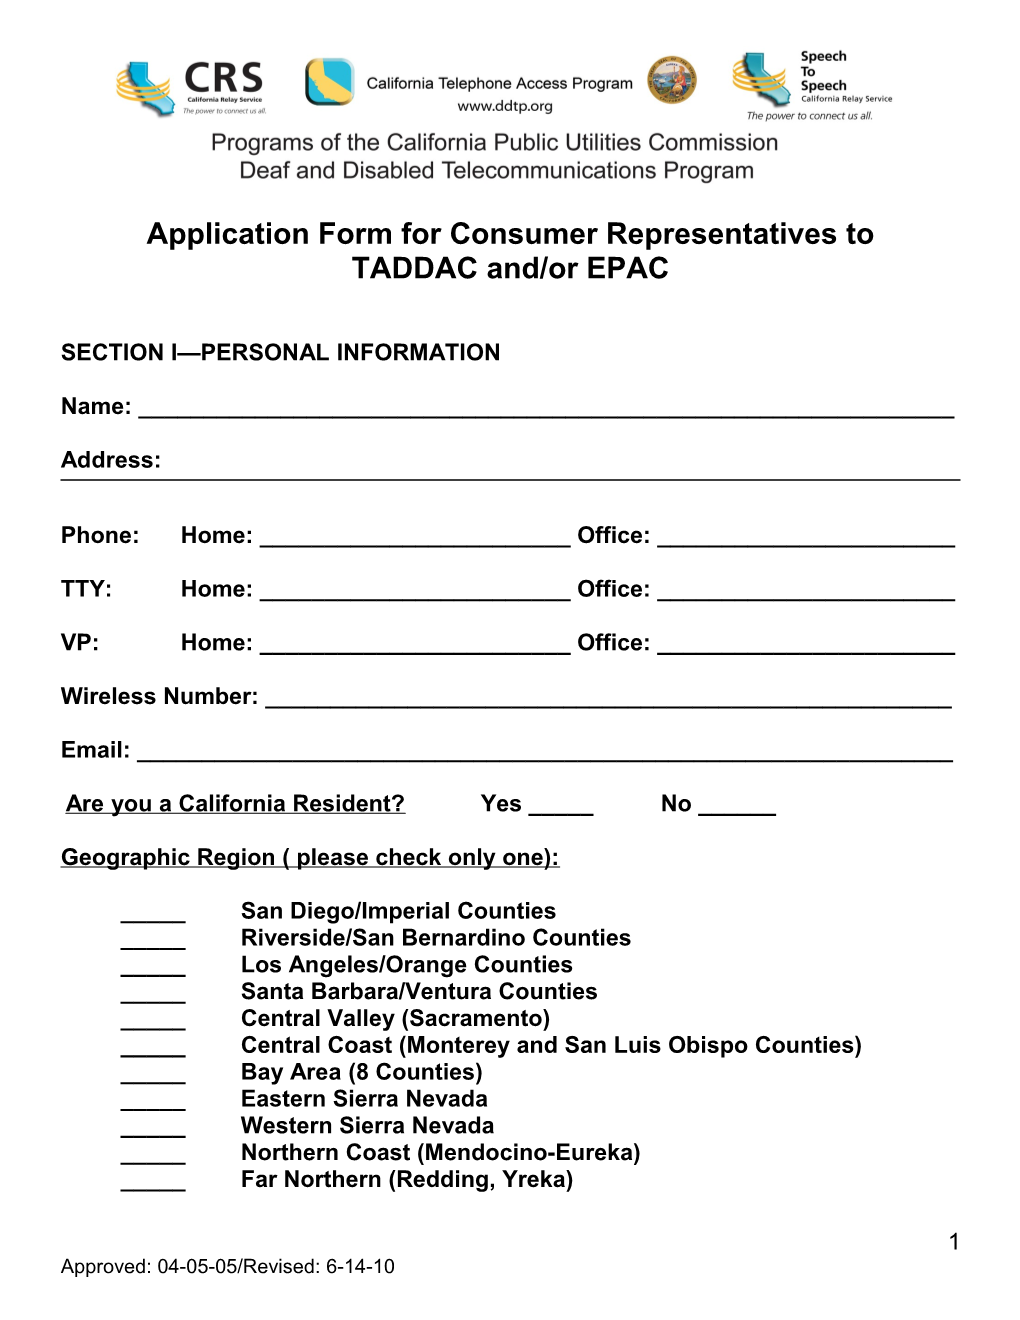 Application Form for Consumer Representatives To